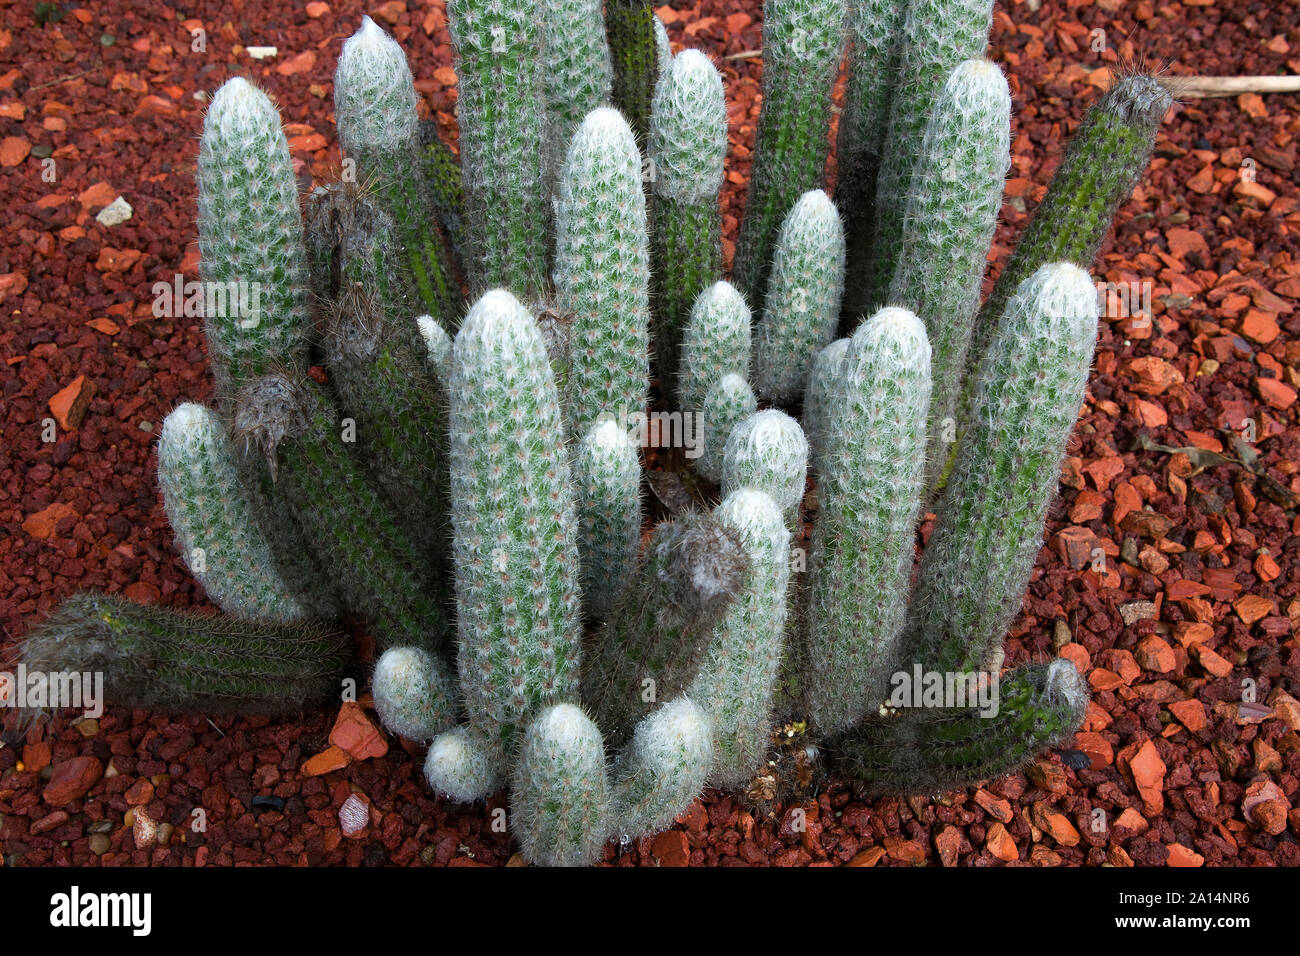 Sydney Australia, furry touch cactus in garden on a rainy day Stock Photo